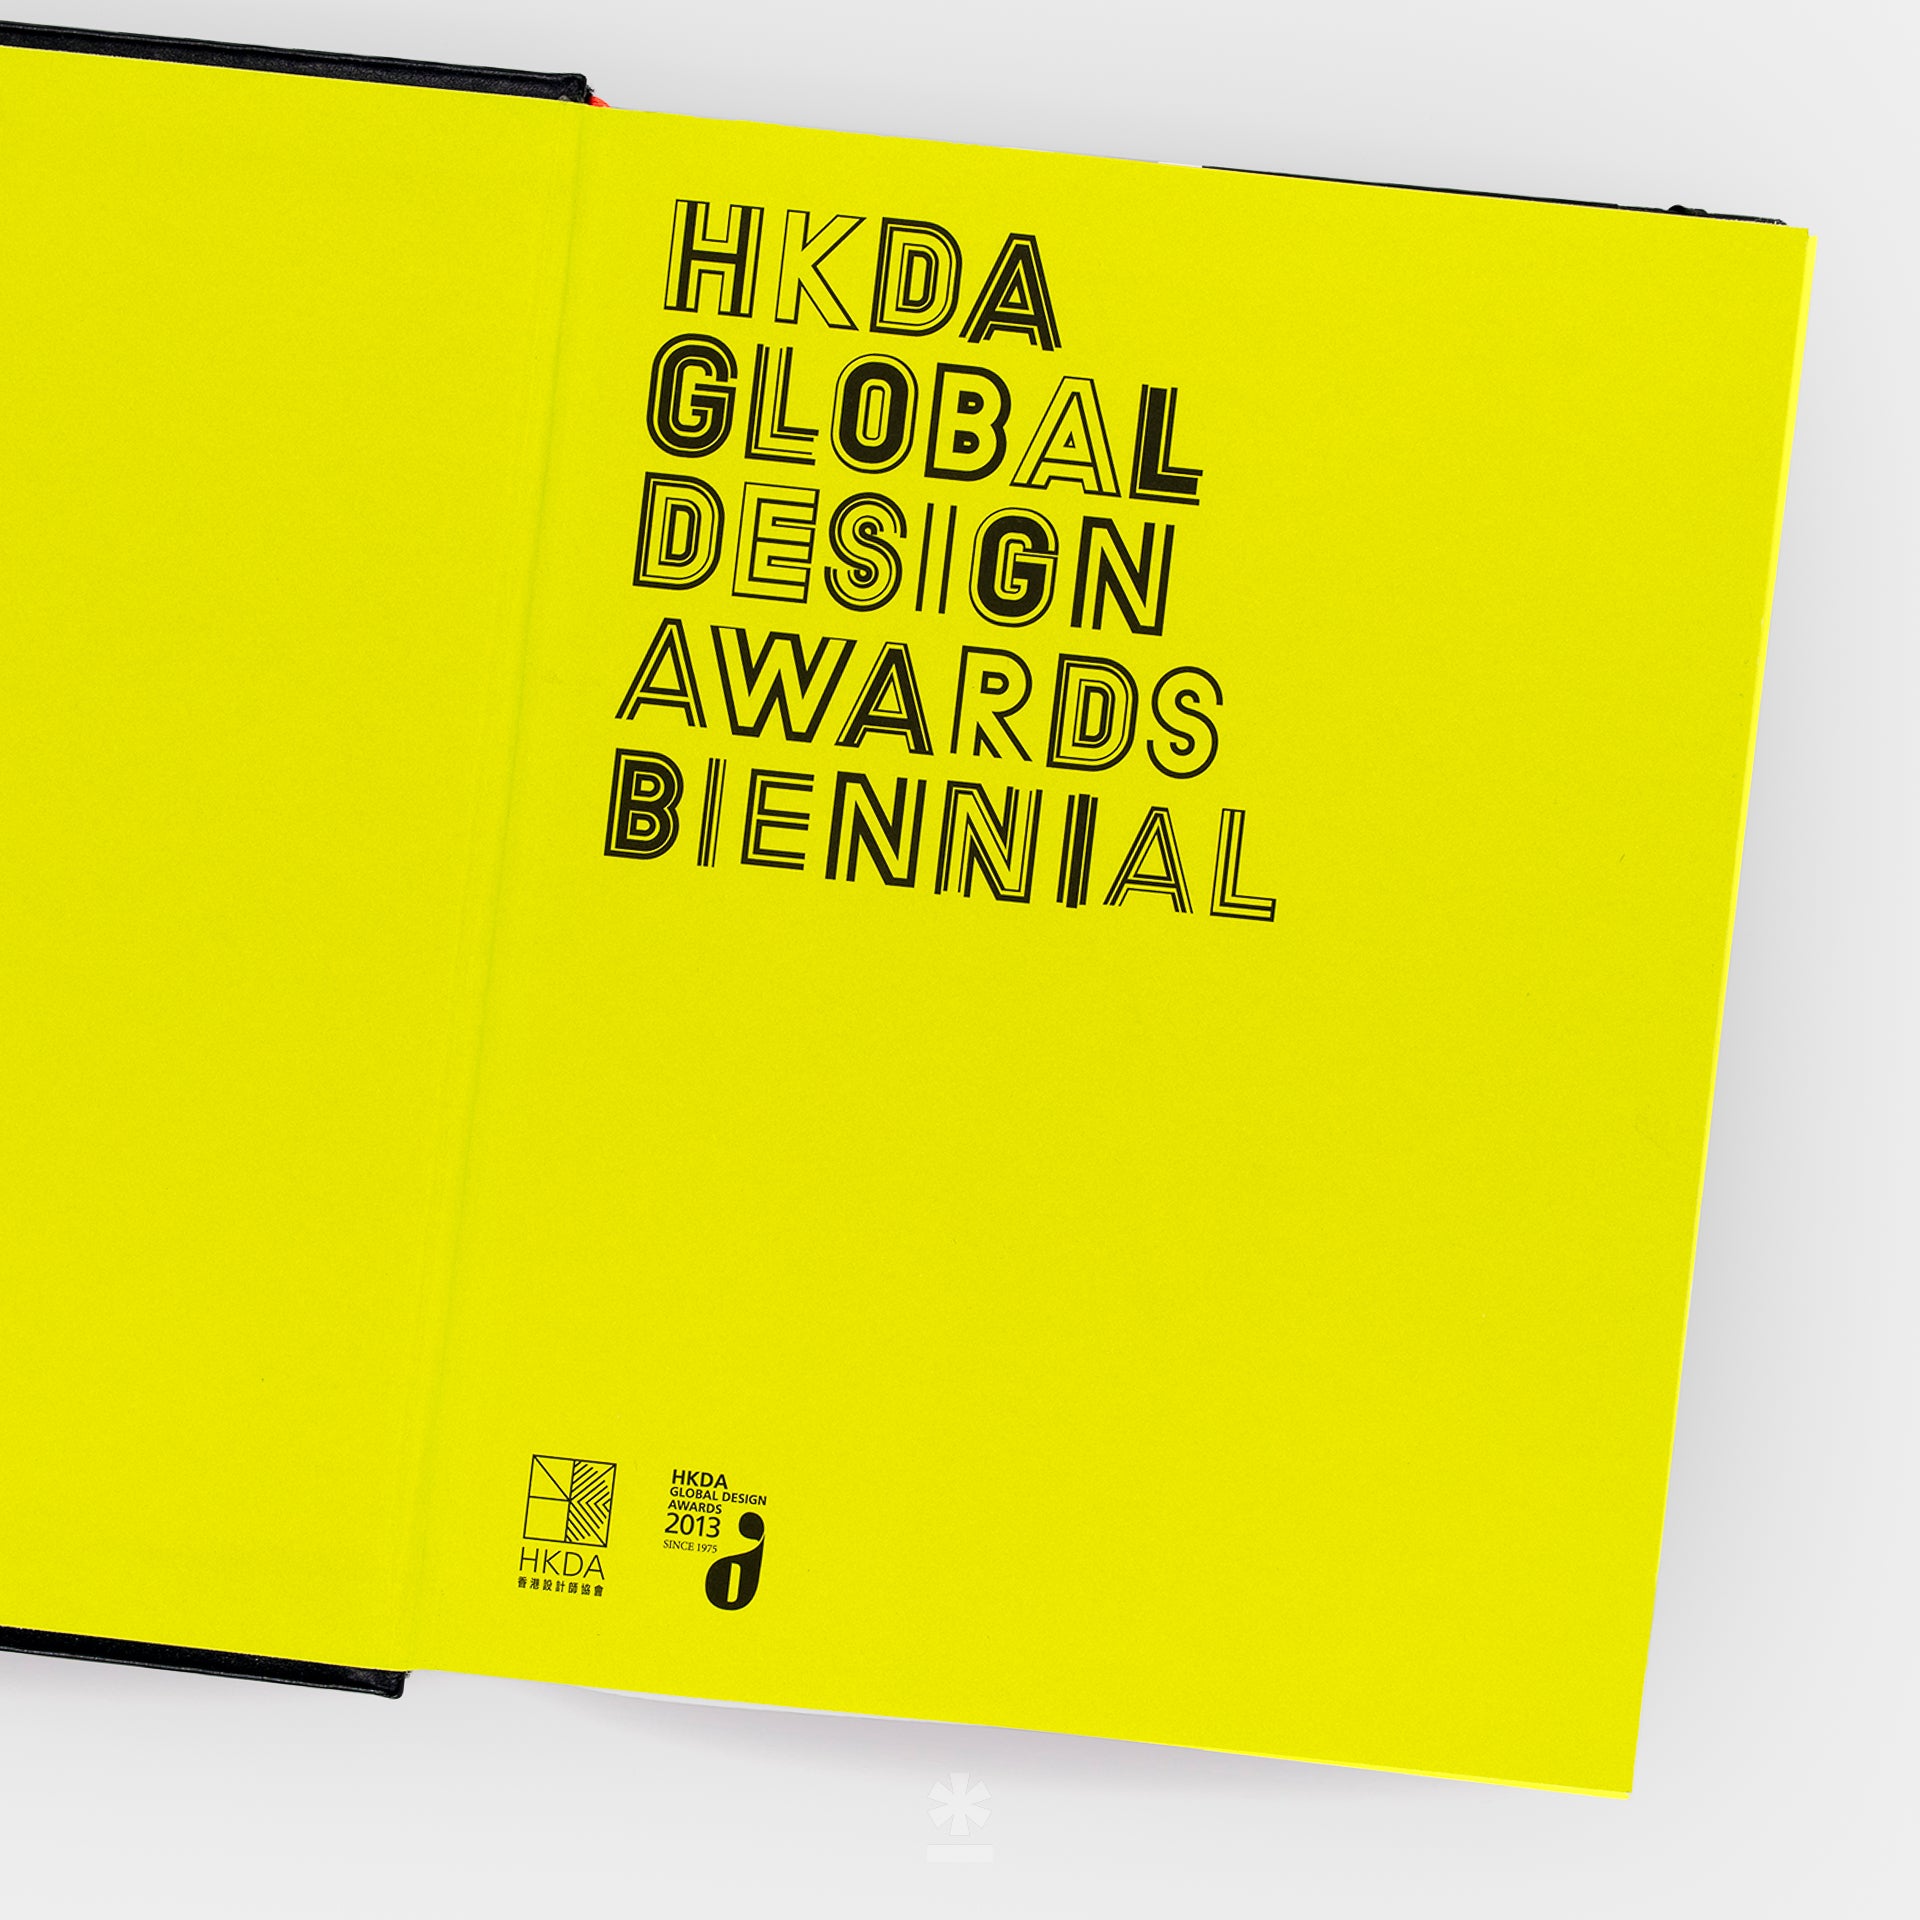 HKDA Global Design Awards 2014: The Design Issue